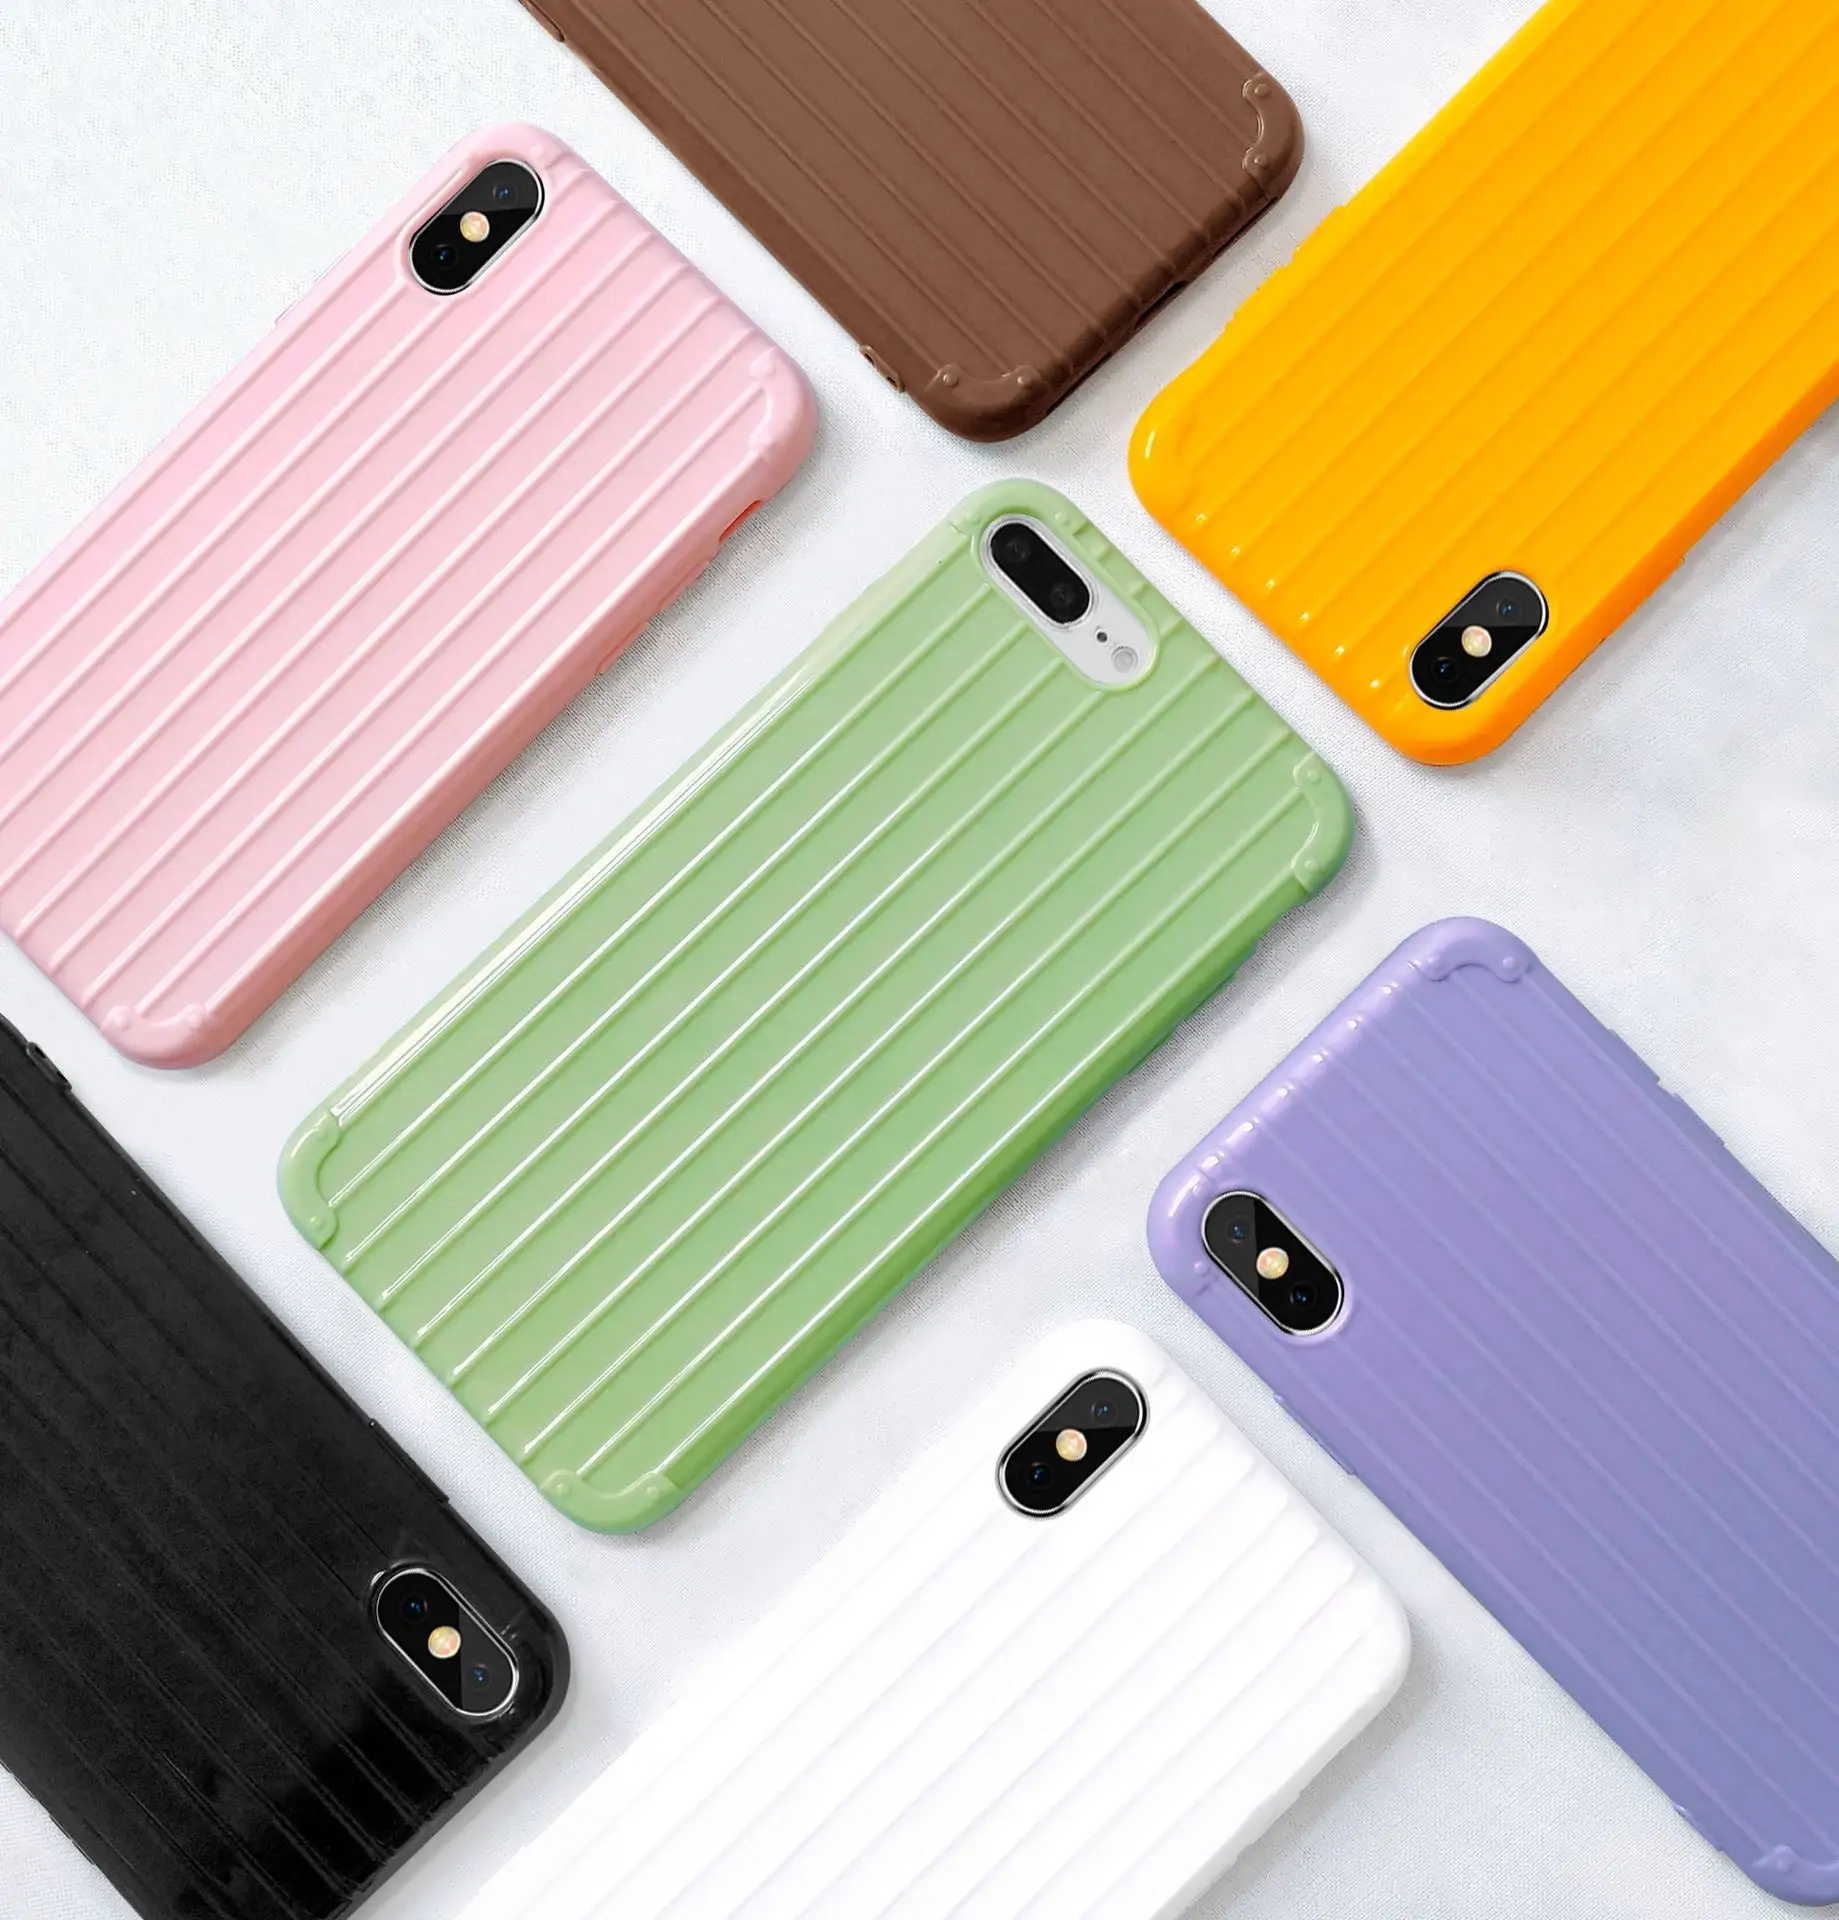 Funda de silicona Tpu suave para teléfono móvil Iphone, carcasa personalizada de color caramelo para Iphone 12 Pro Max 13